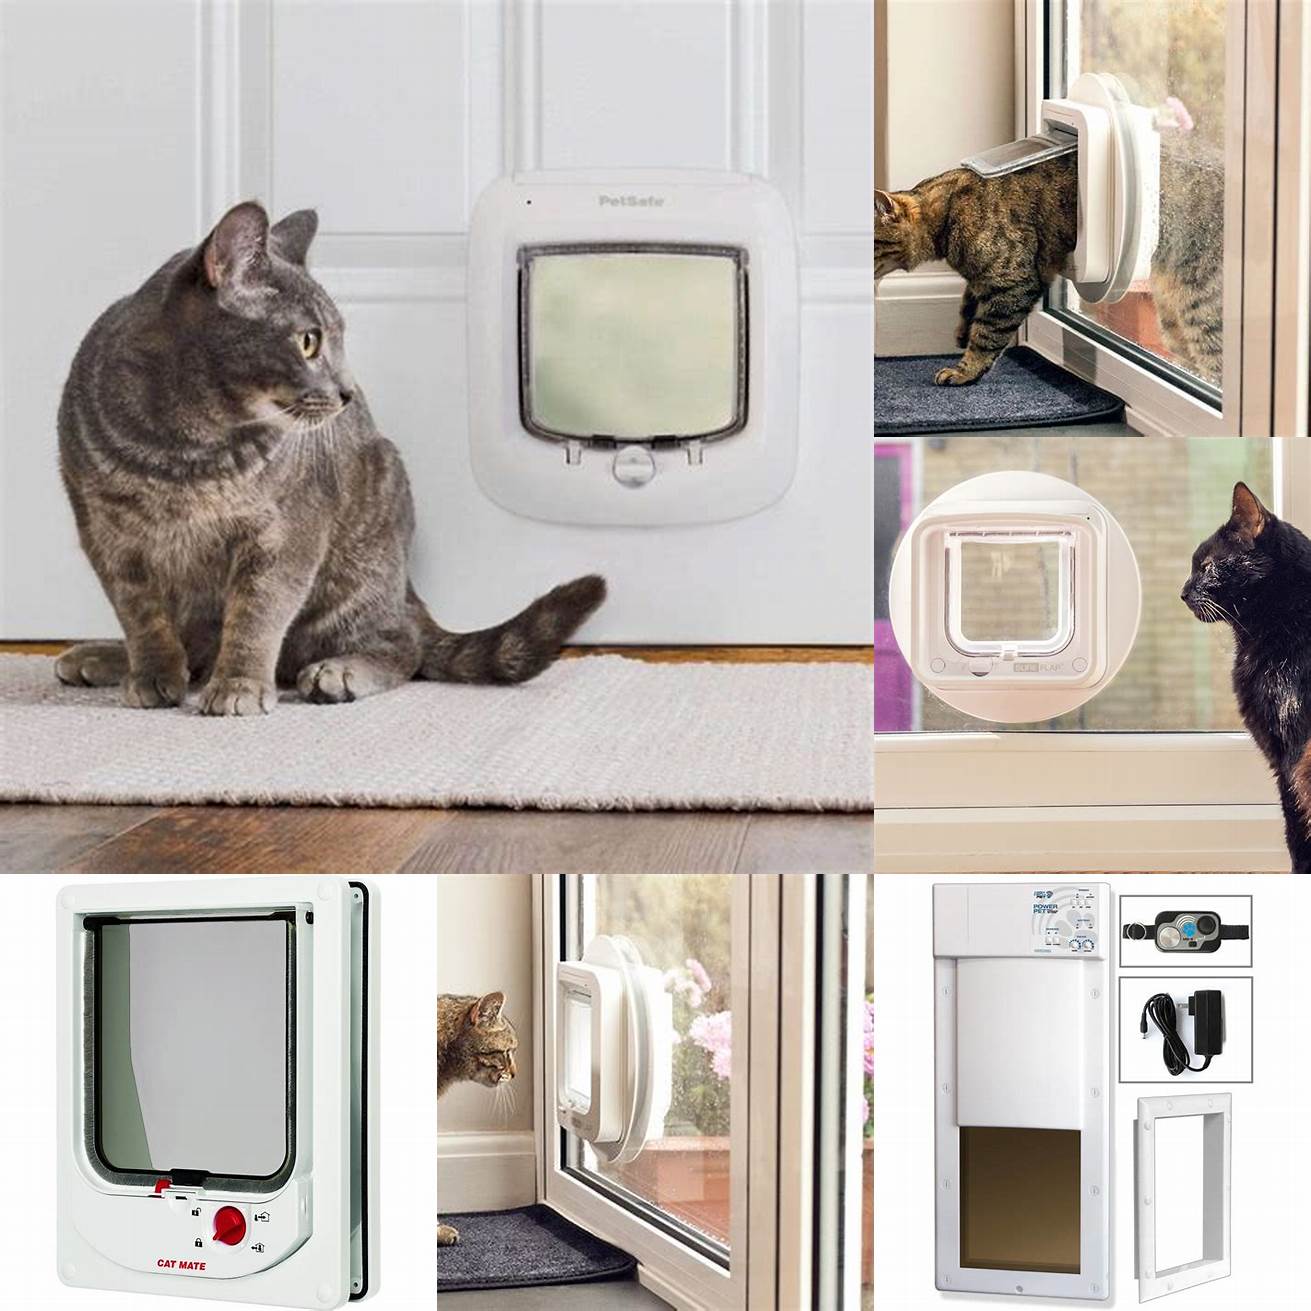 Electronic cat doors